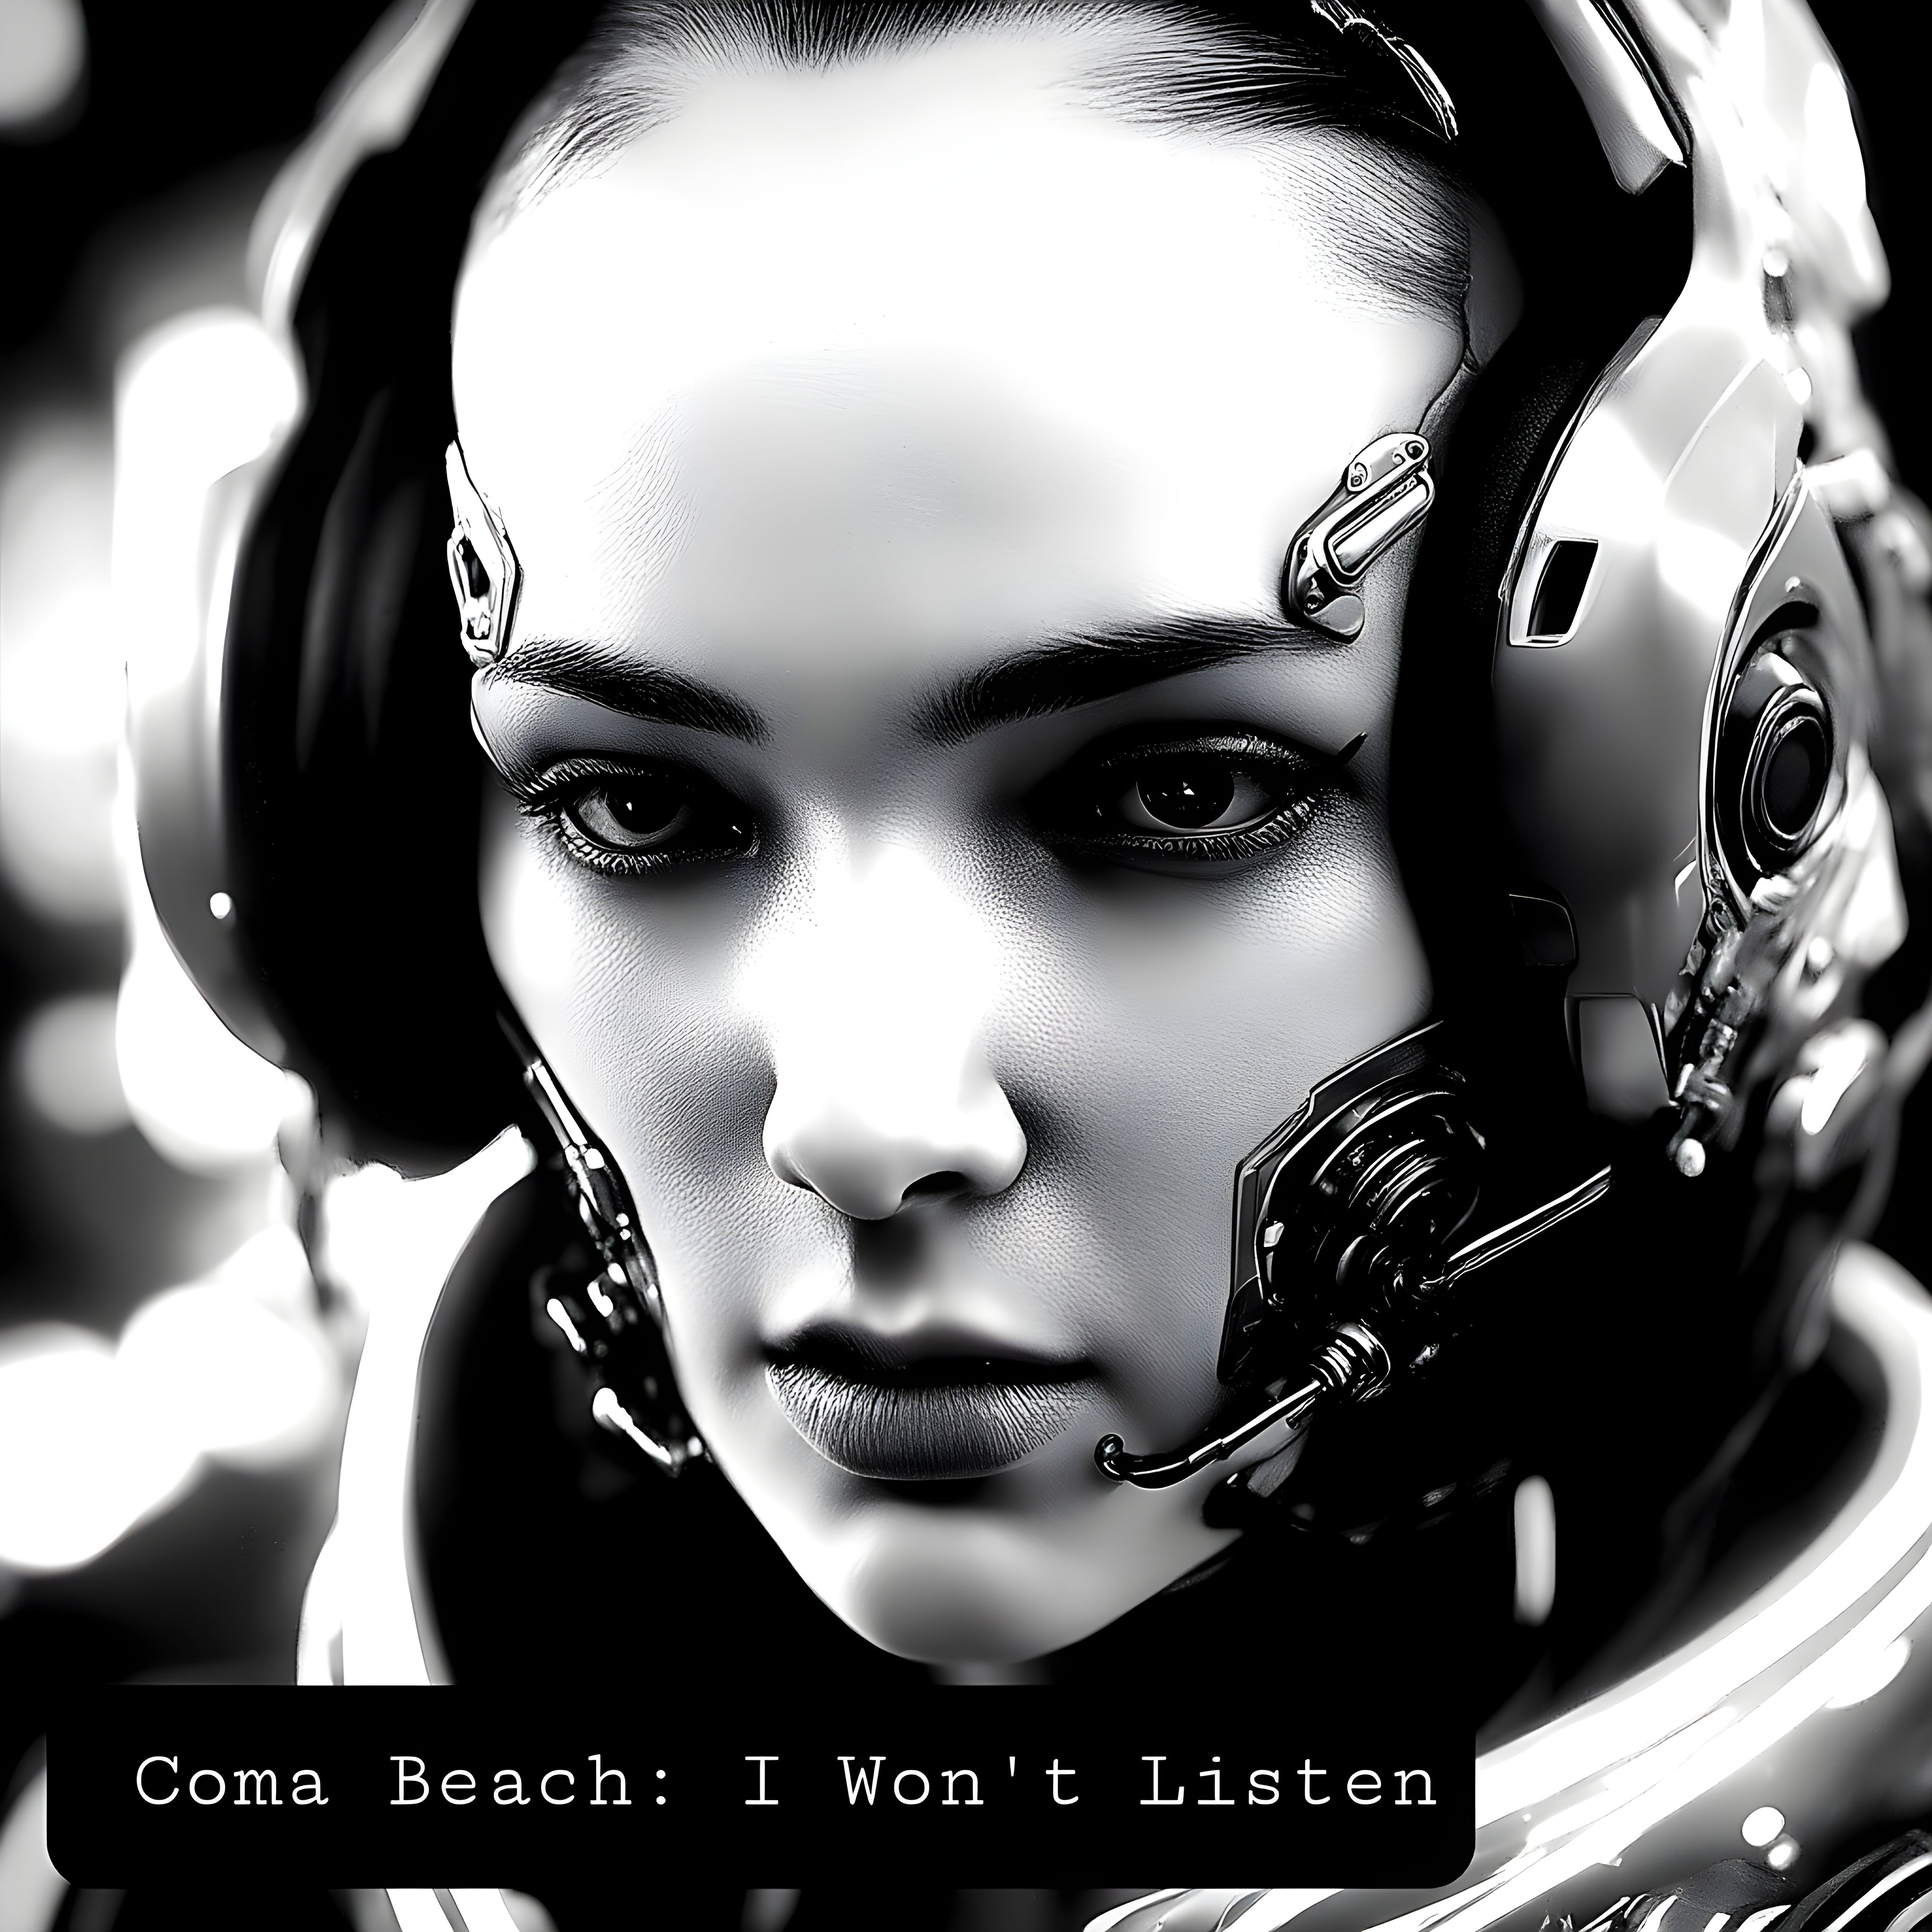 COMA BEACH EP: “I Won’t Listen” – An In-Depth Exploration